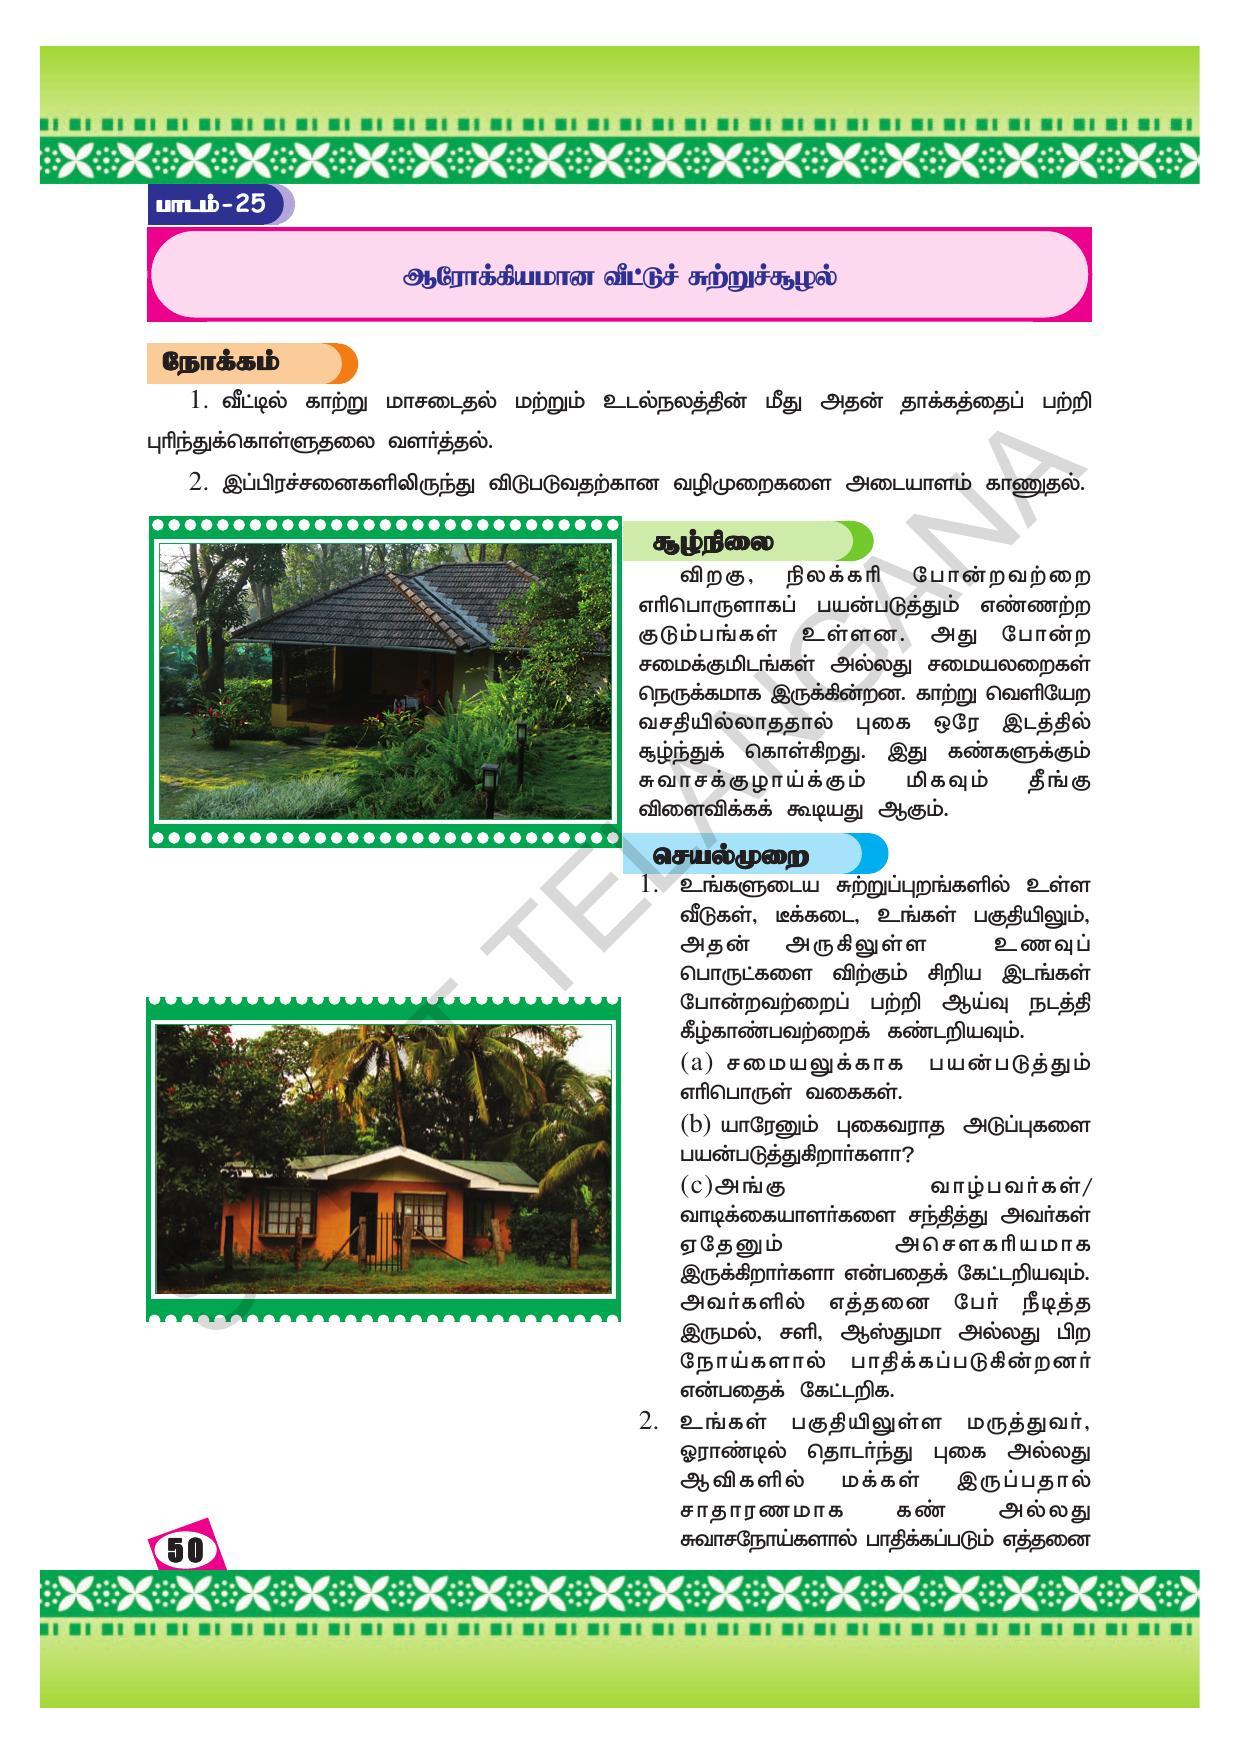 TS SCERT Class 10 Social Environmental Education (Tamil Medium) Text Book - Page 58